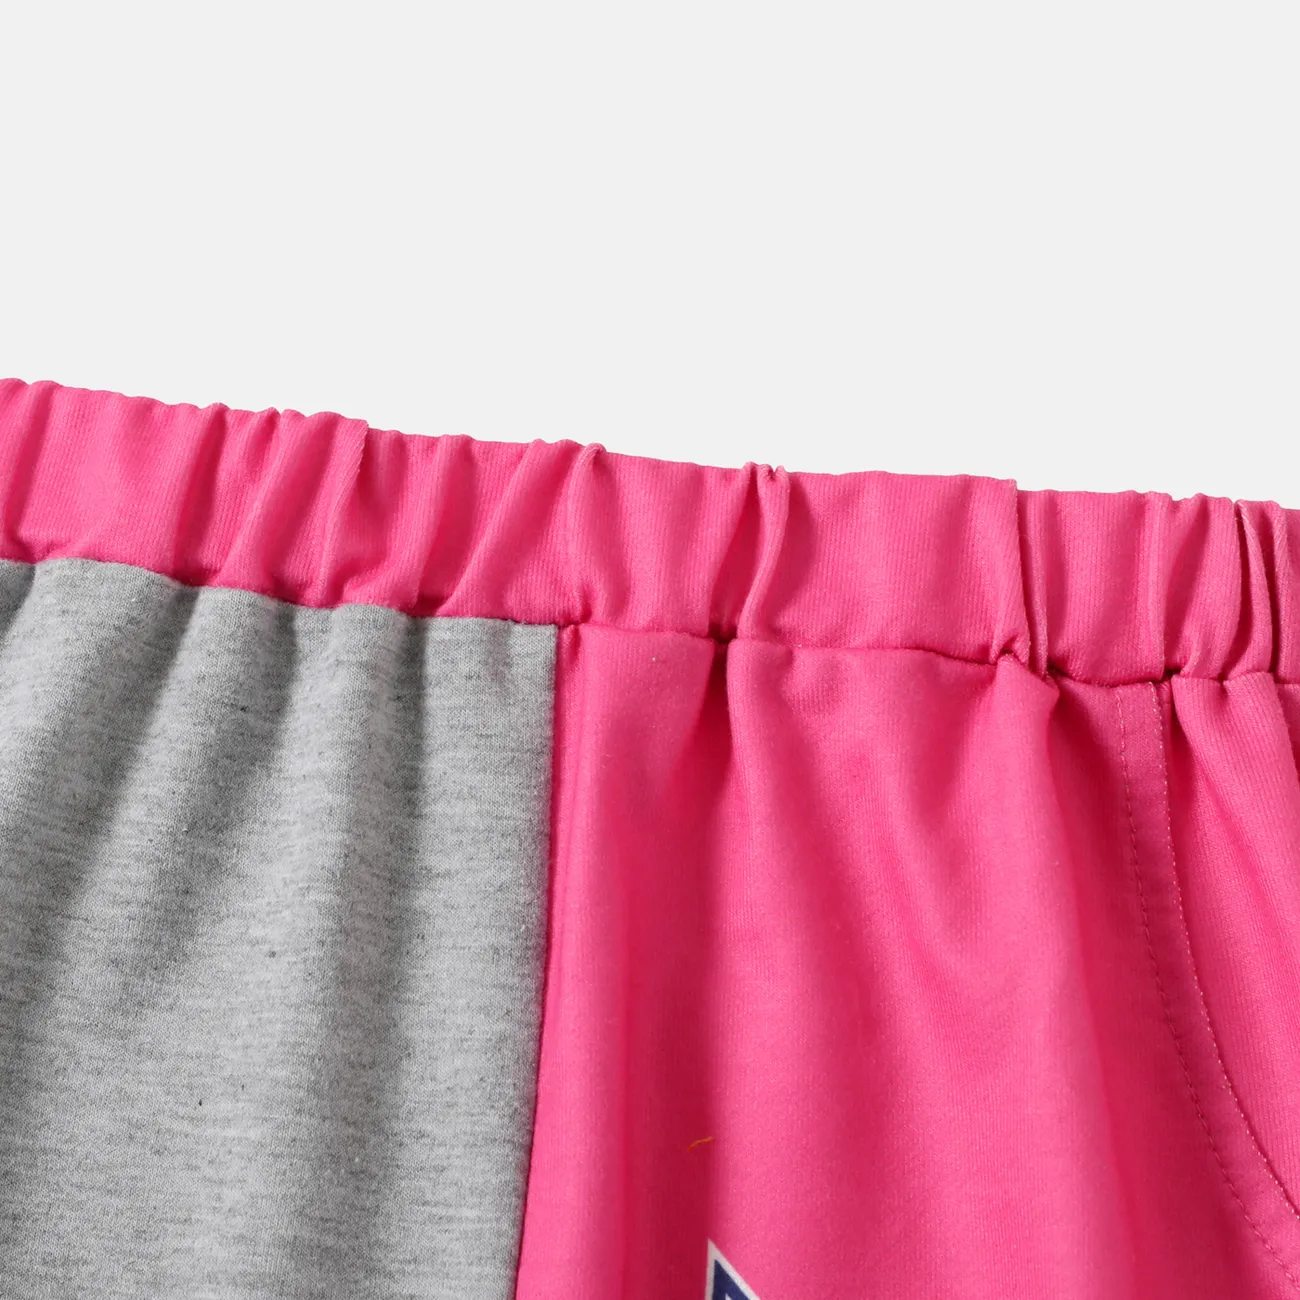 PAW Patrol Toddler Boy/Girl Striped Colorblock Elasticized Pants Pink big image 1